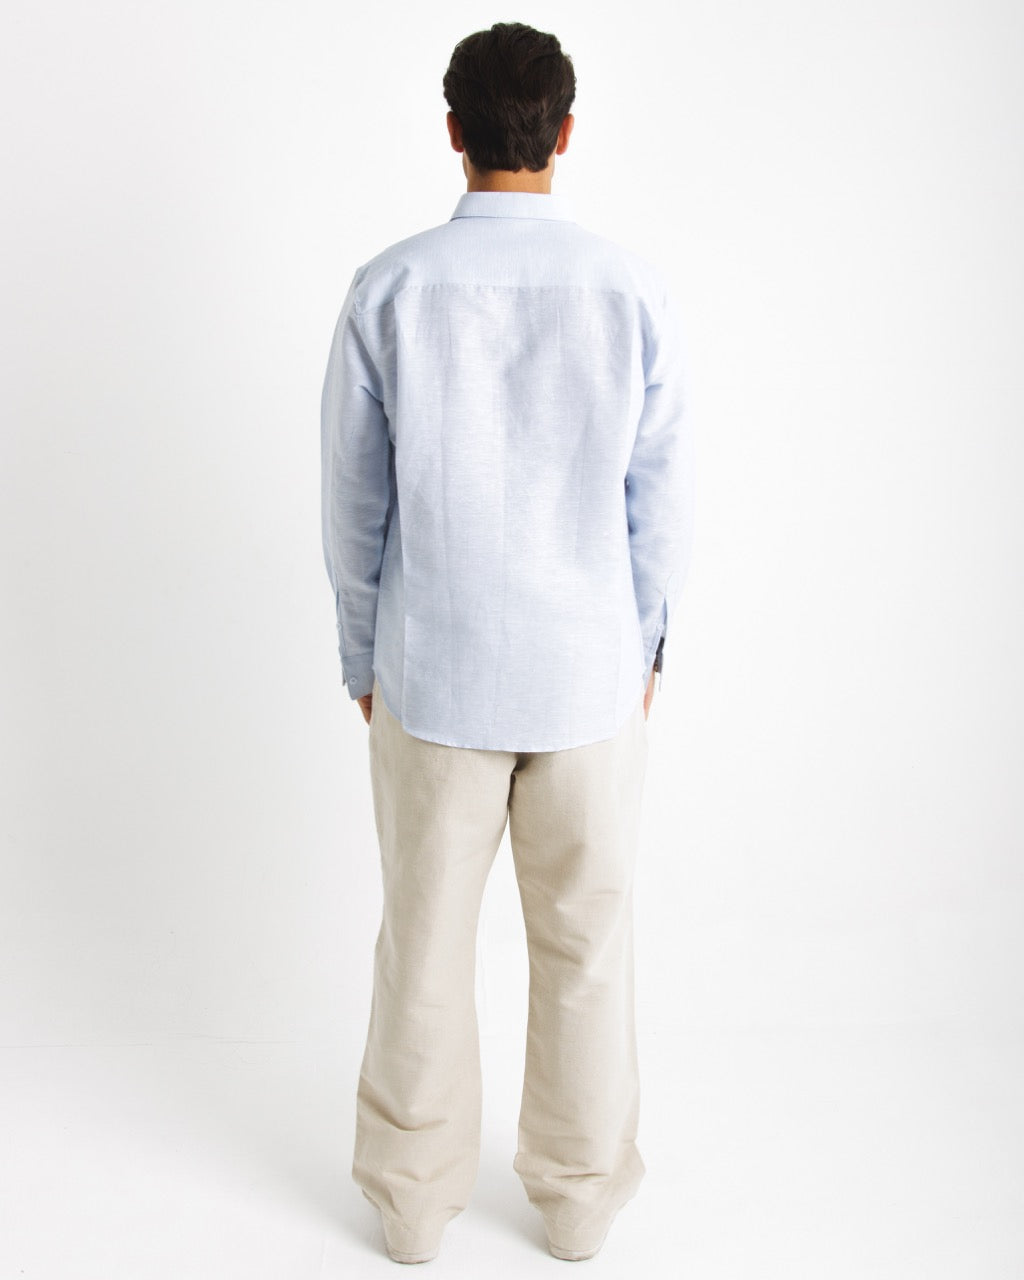 401 Blue Long Sleeve Shirts